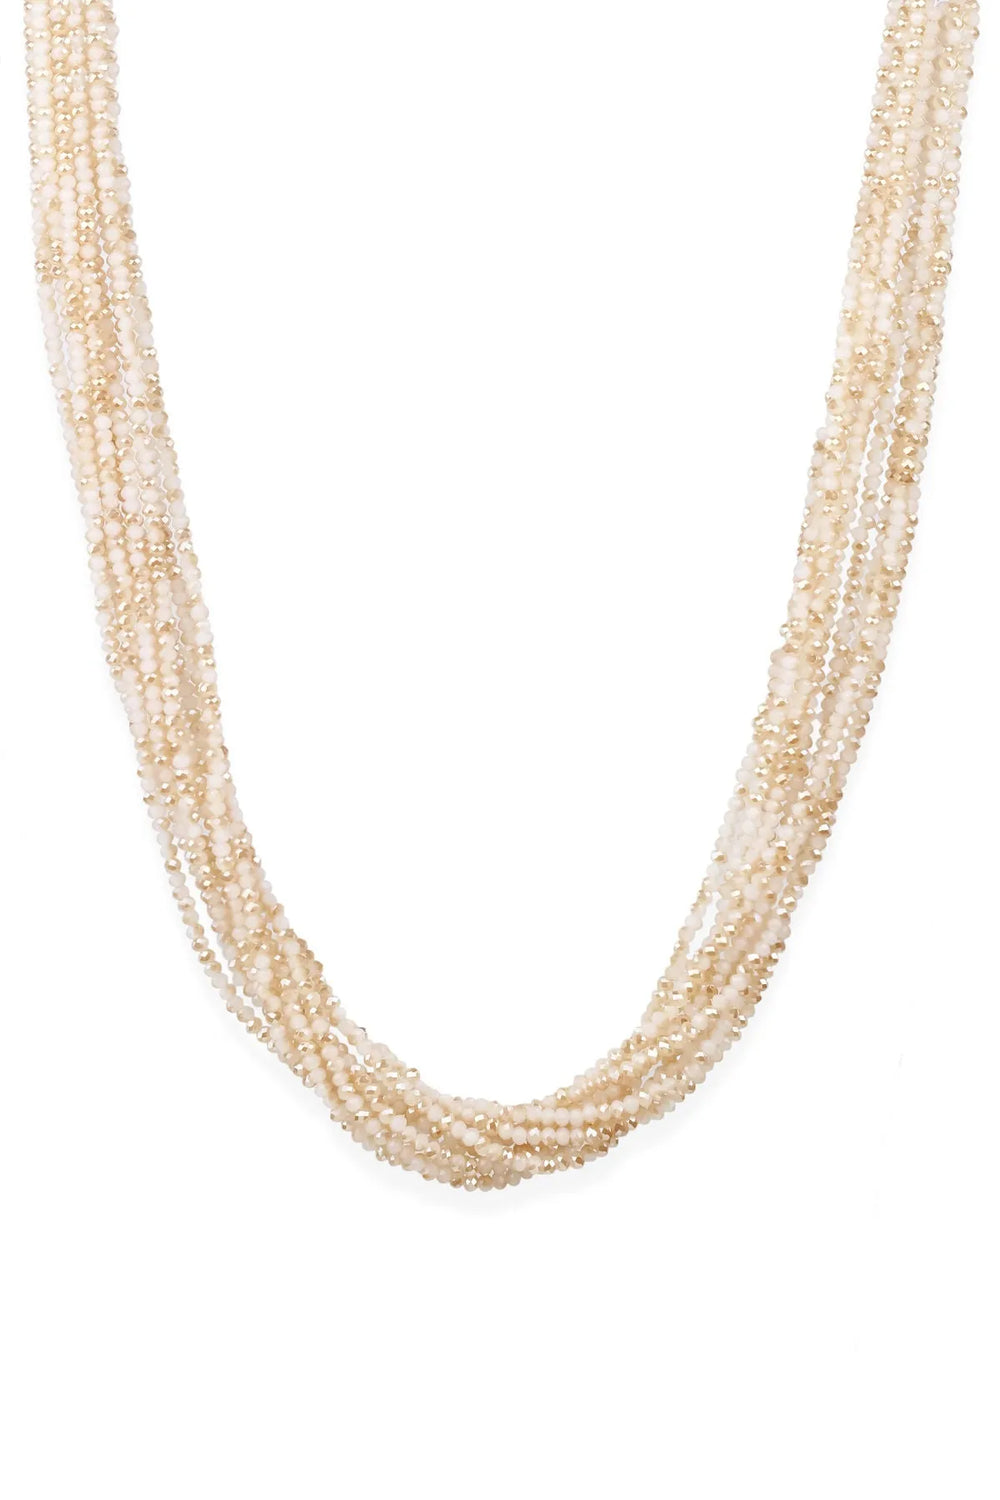 Multi Strand Taupe Bead Short Necklace Navajo White